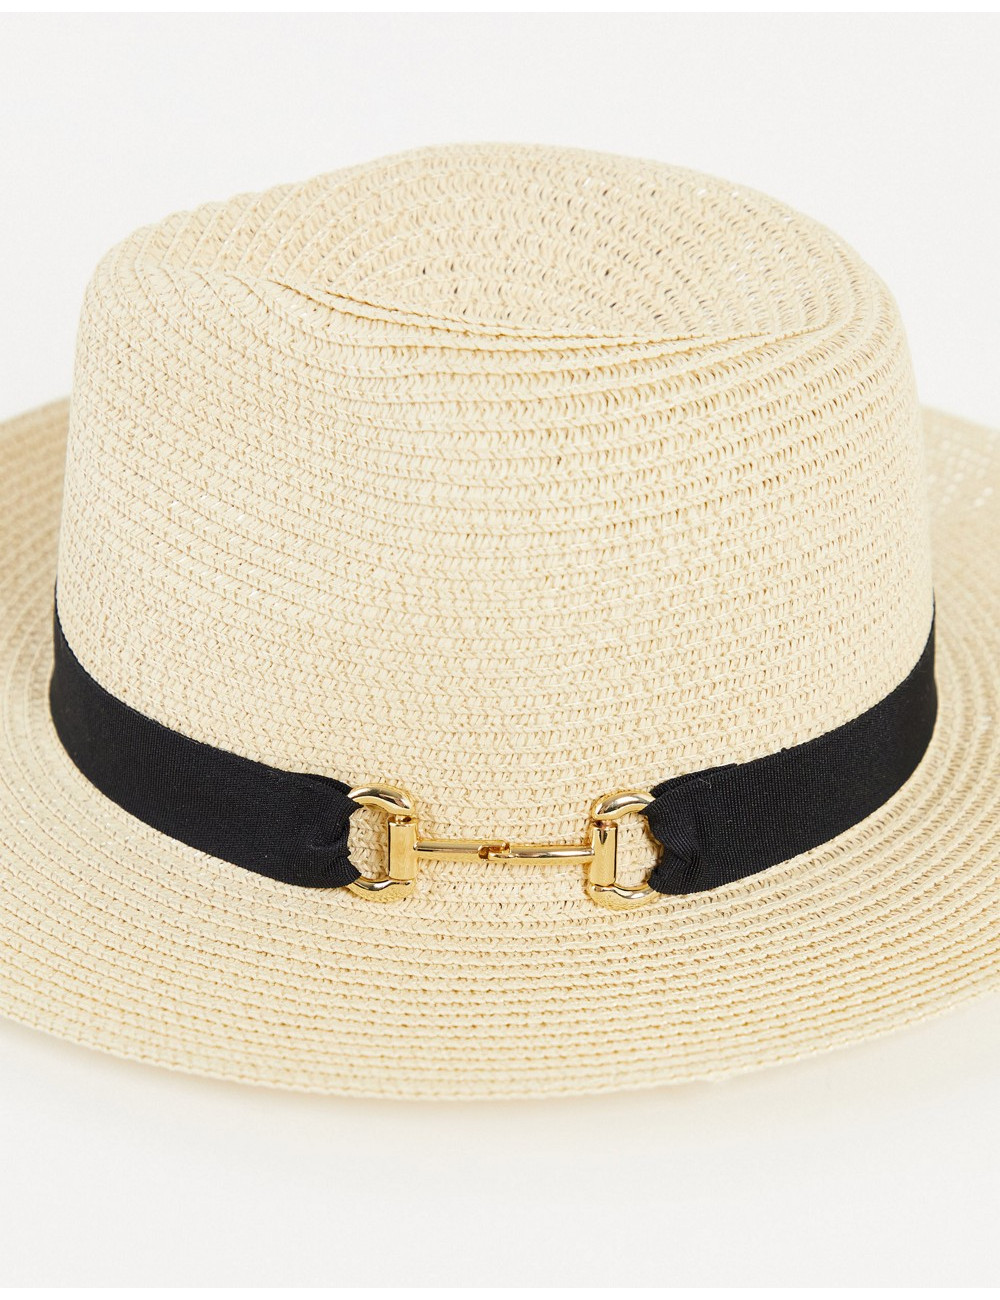 ALDO Masyn straw hat with...